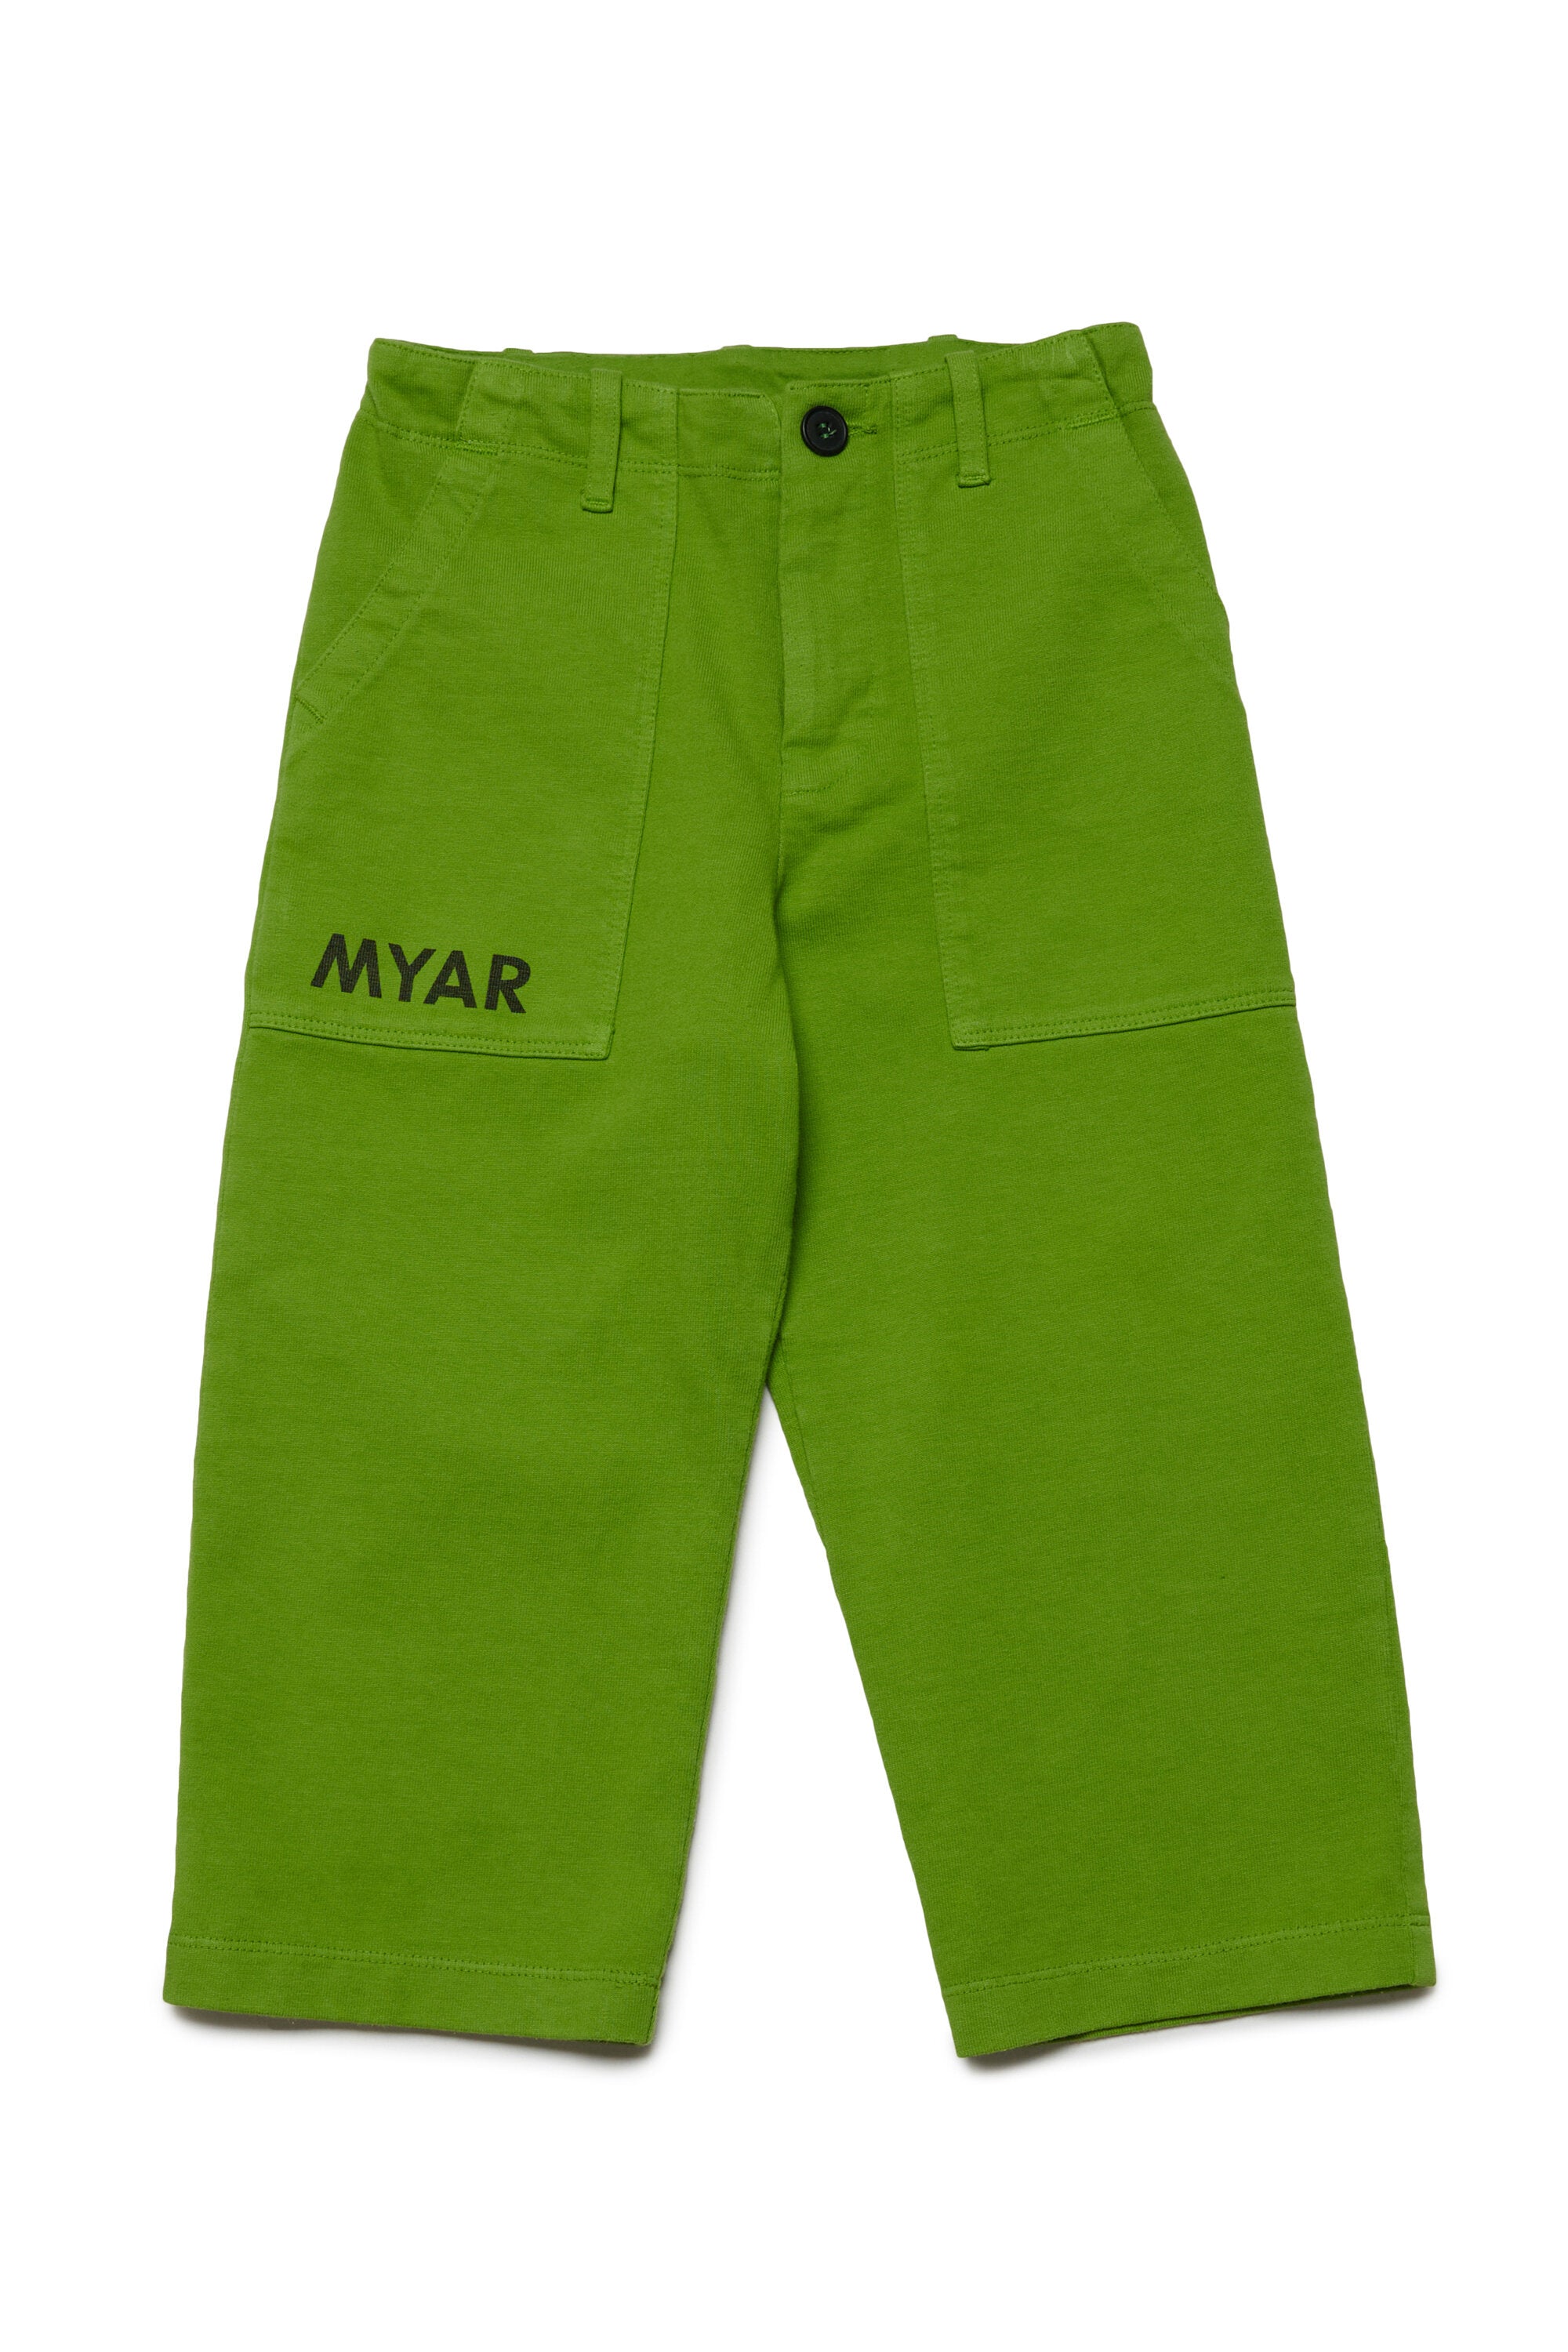 Utility pants with MYAR logo